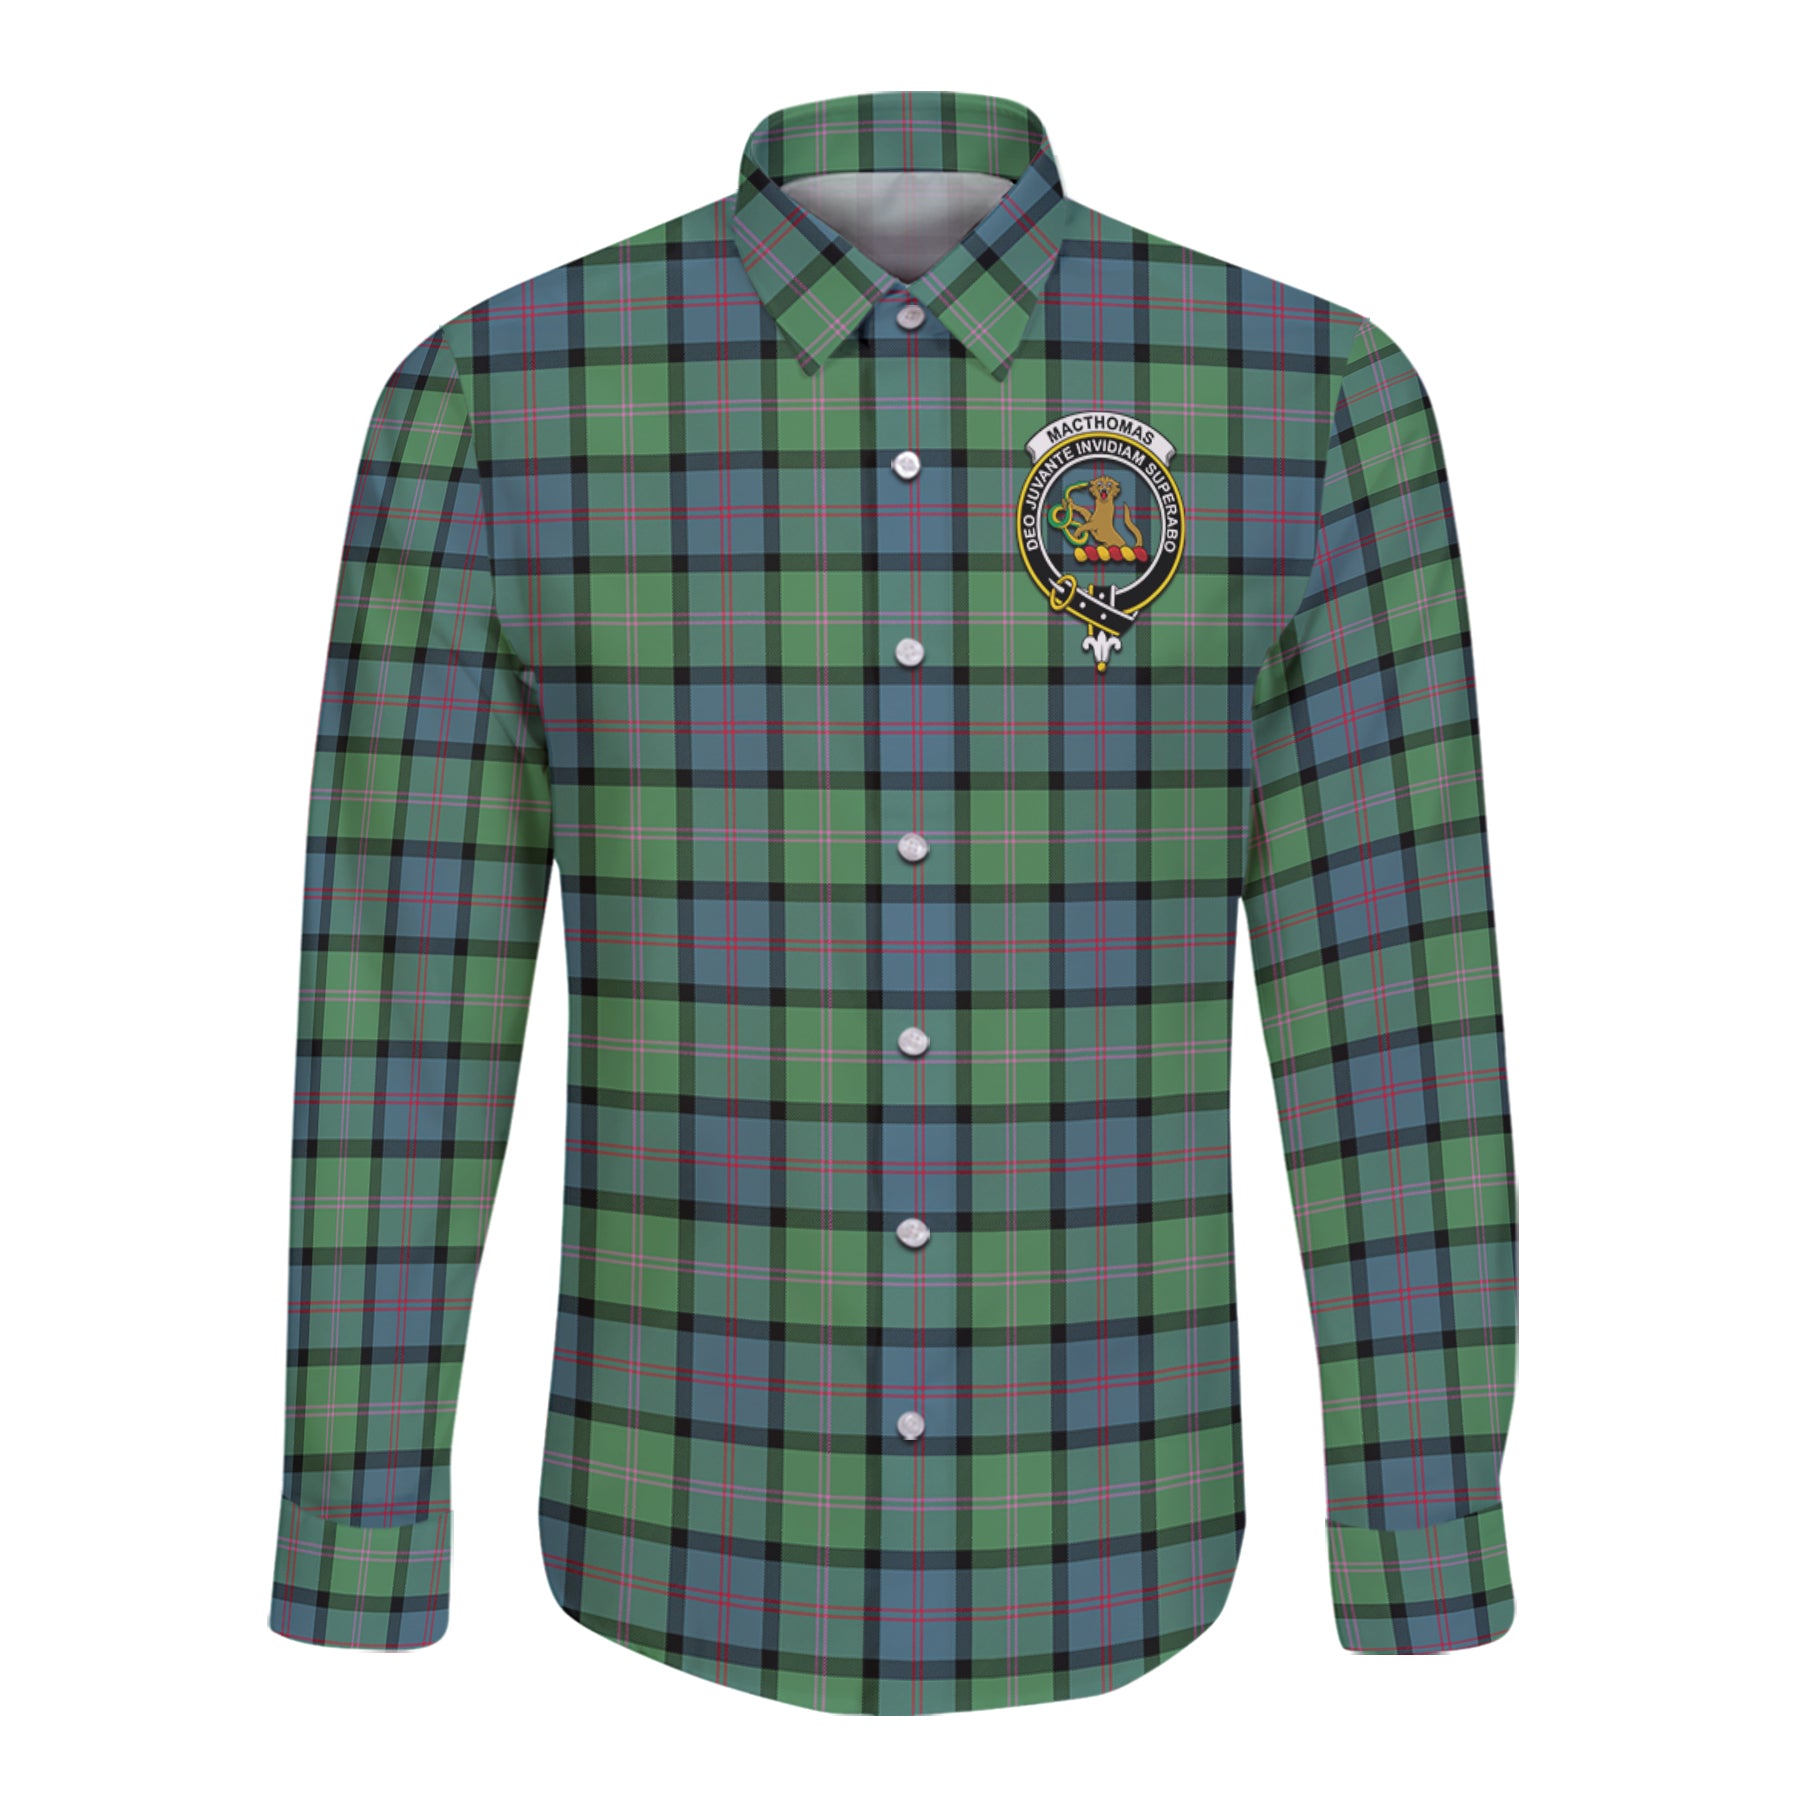 Macthomas Ancient Tartan Long Sleeve Button Up Shirt with Scottish Family Crest K23